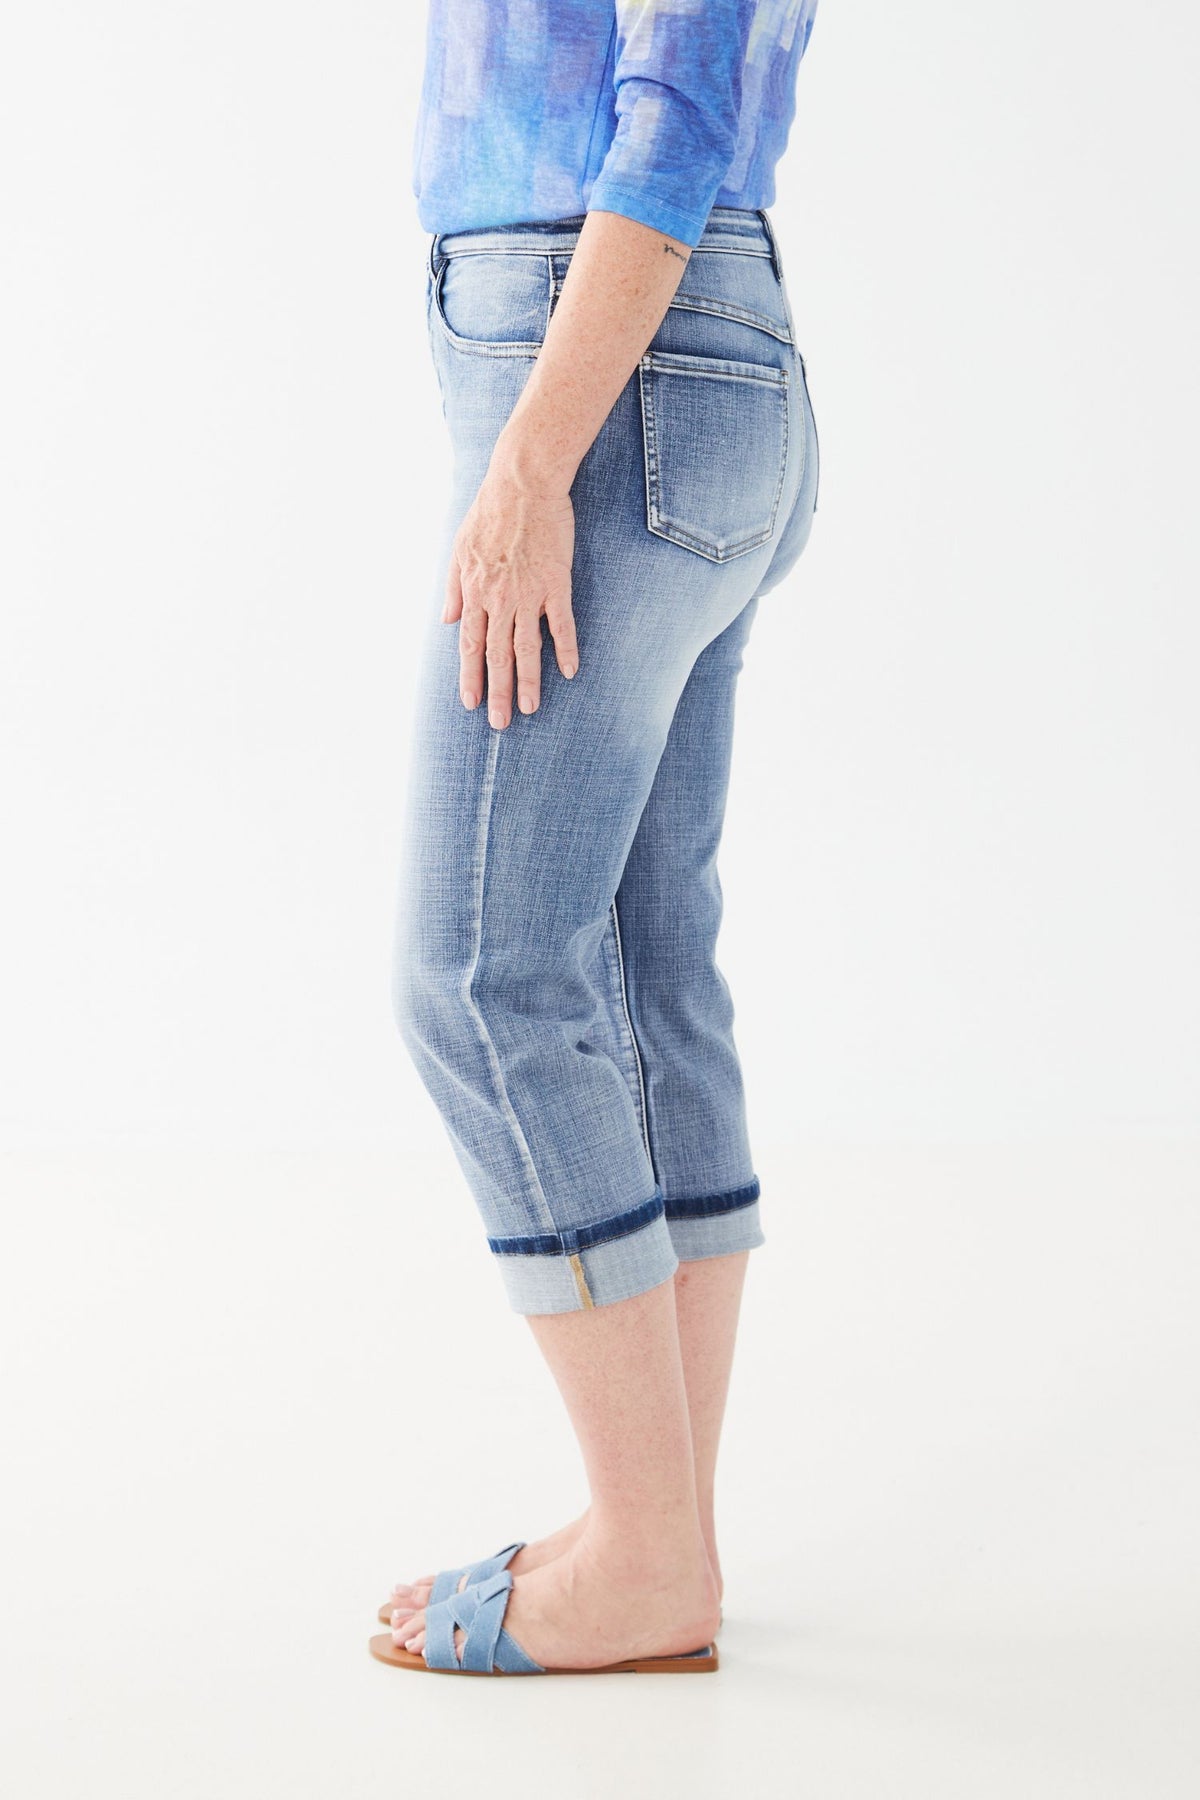 FDJ Suzanne Capri Jeans - Style 6816809, side